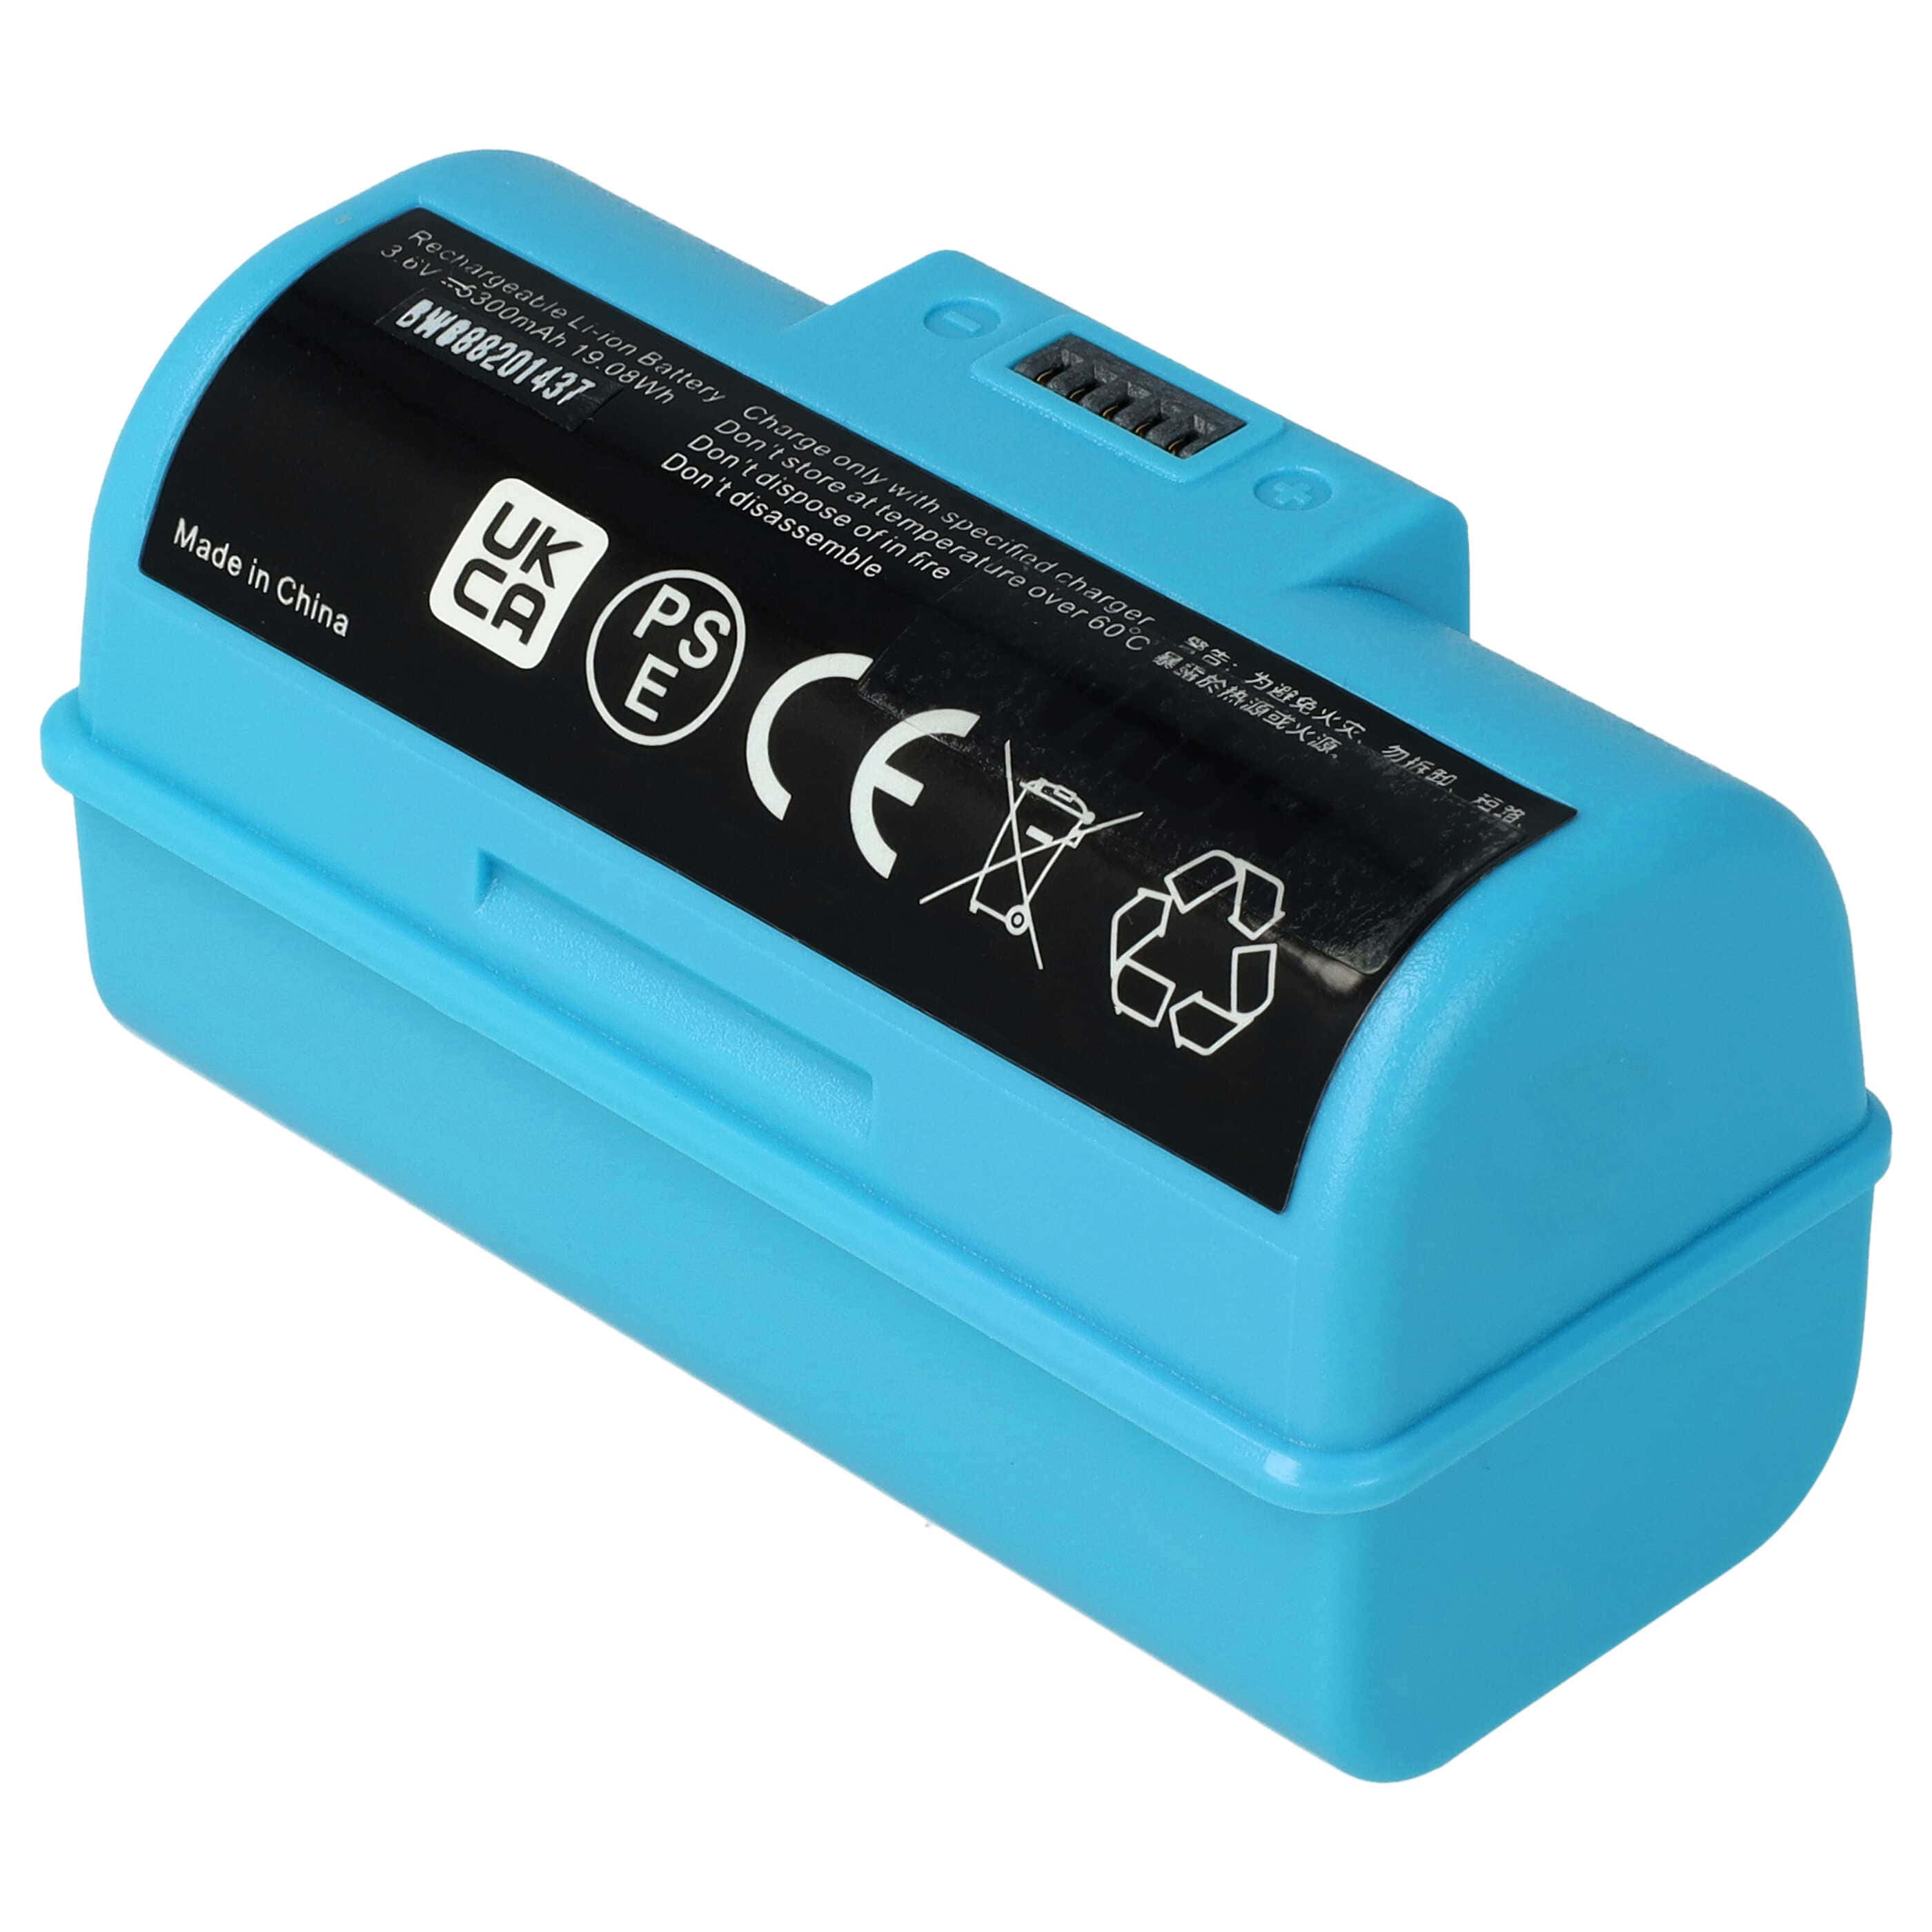 Batería reemplaza iRobot BC674, 4446040 para aspiradora iRobot - 5300 mAh 3,6 V Li-Ion azul